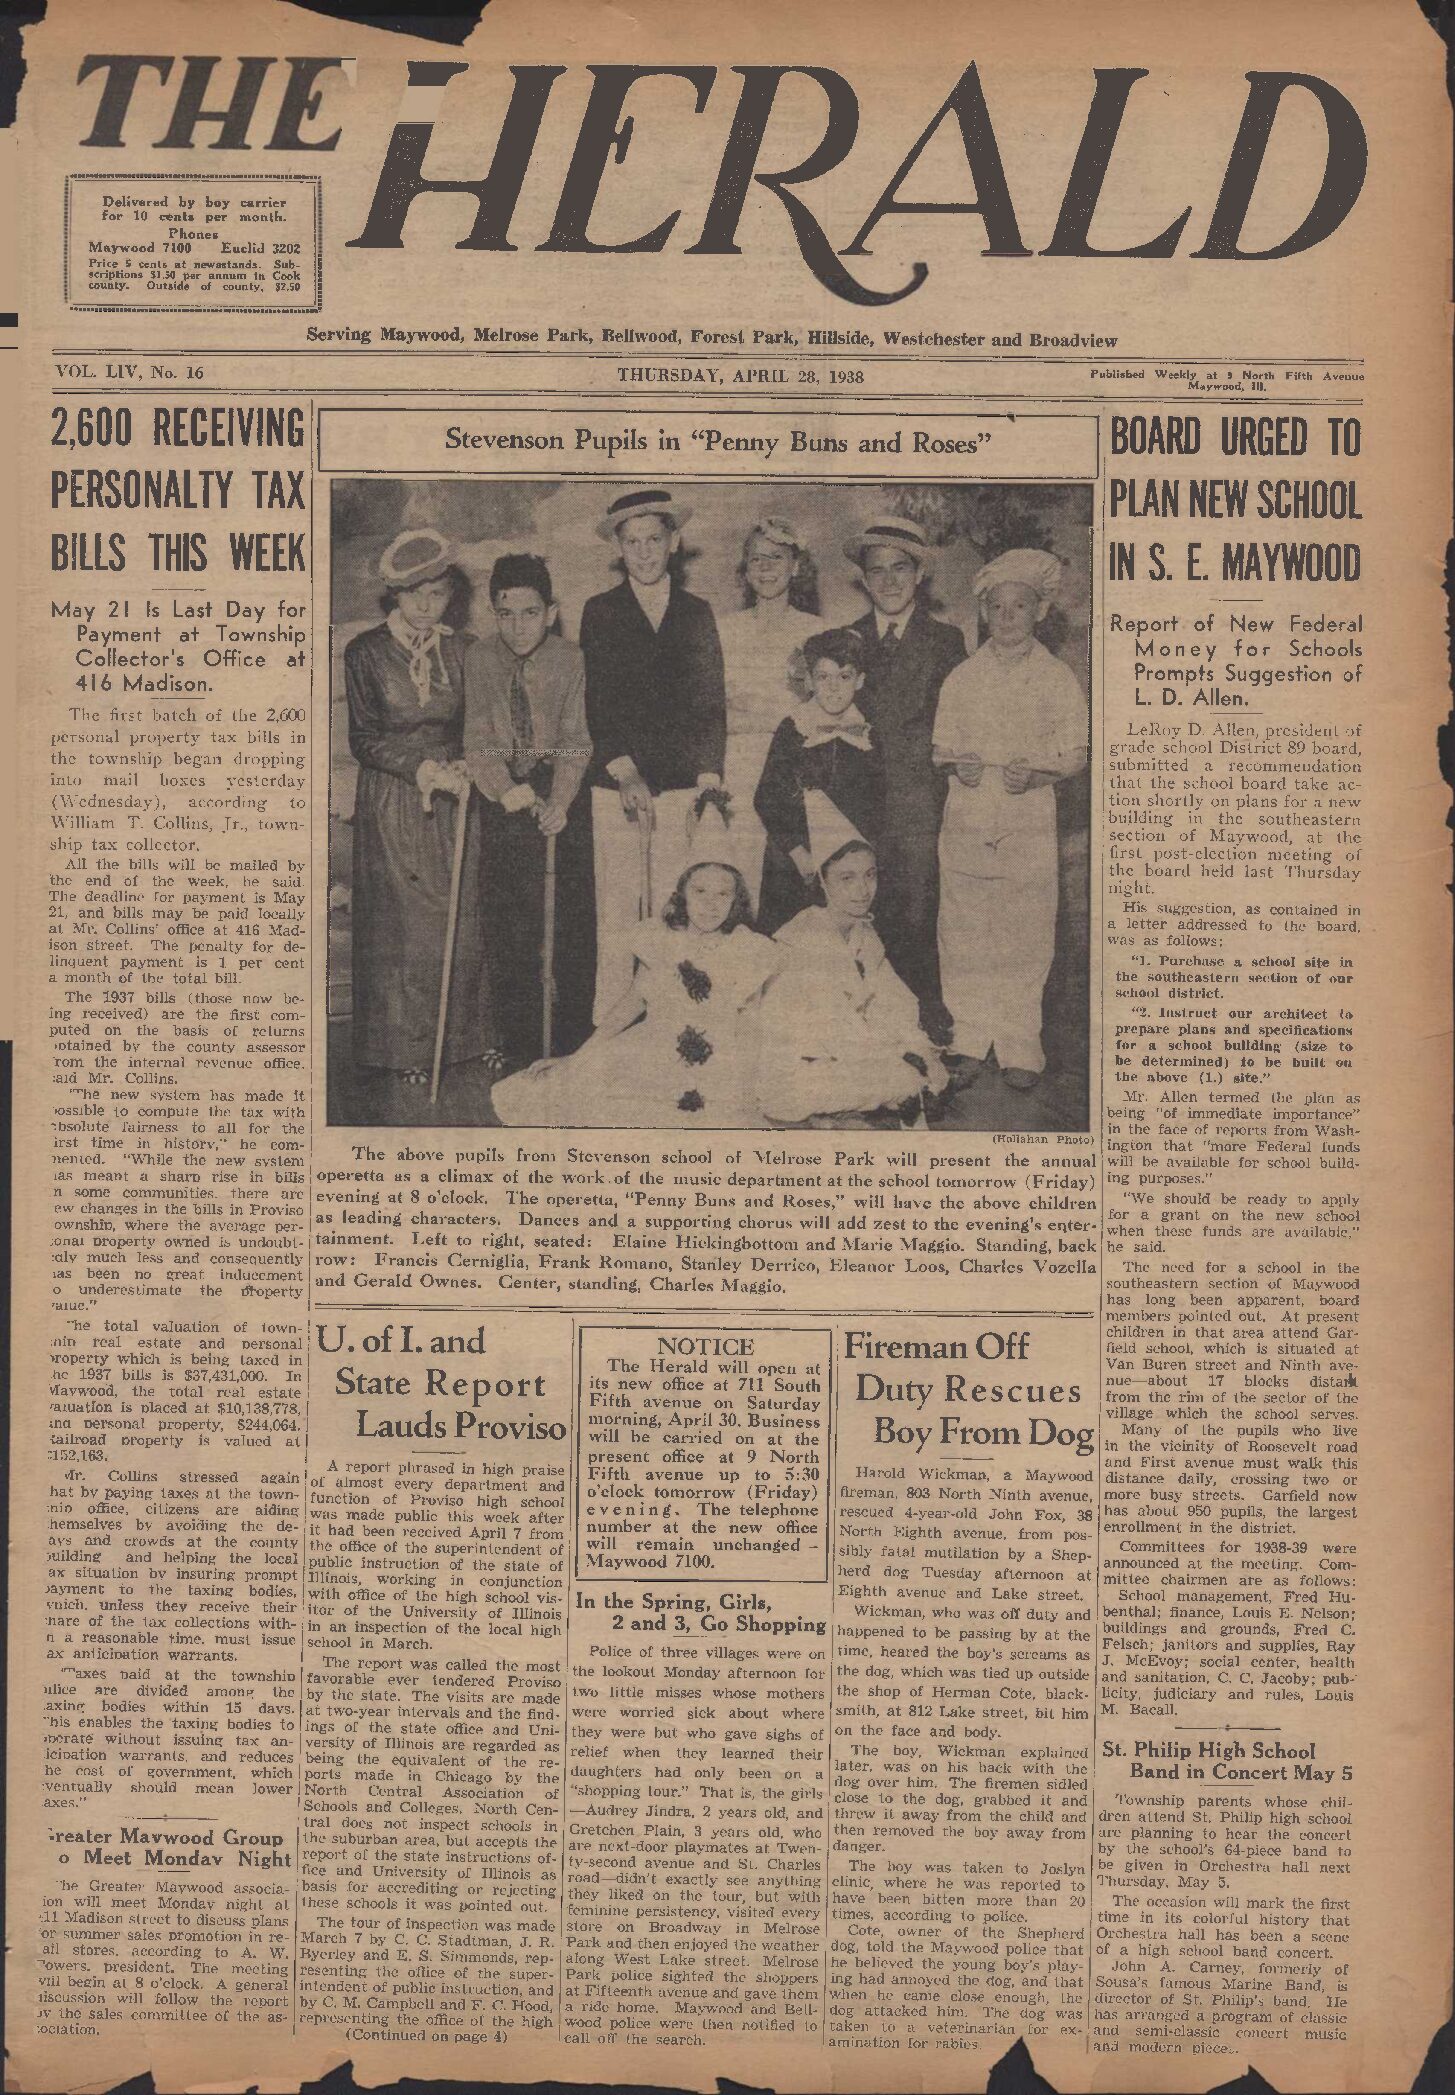 The Herald – 19380428